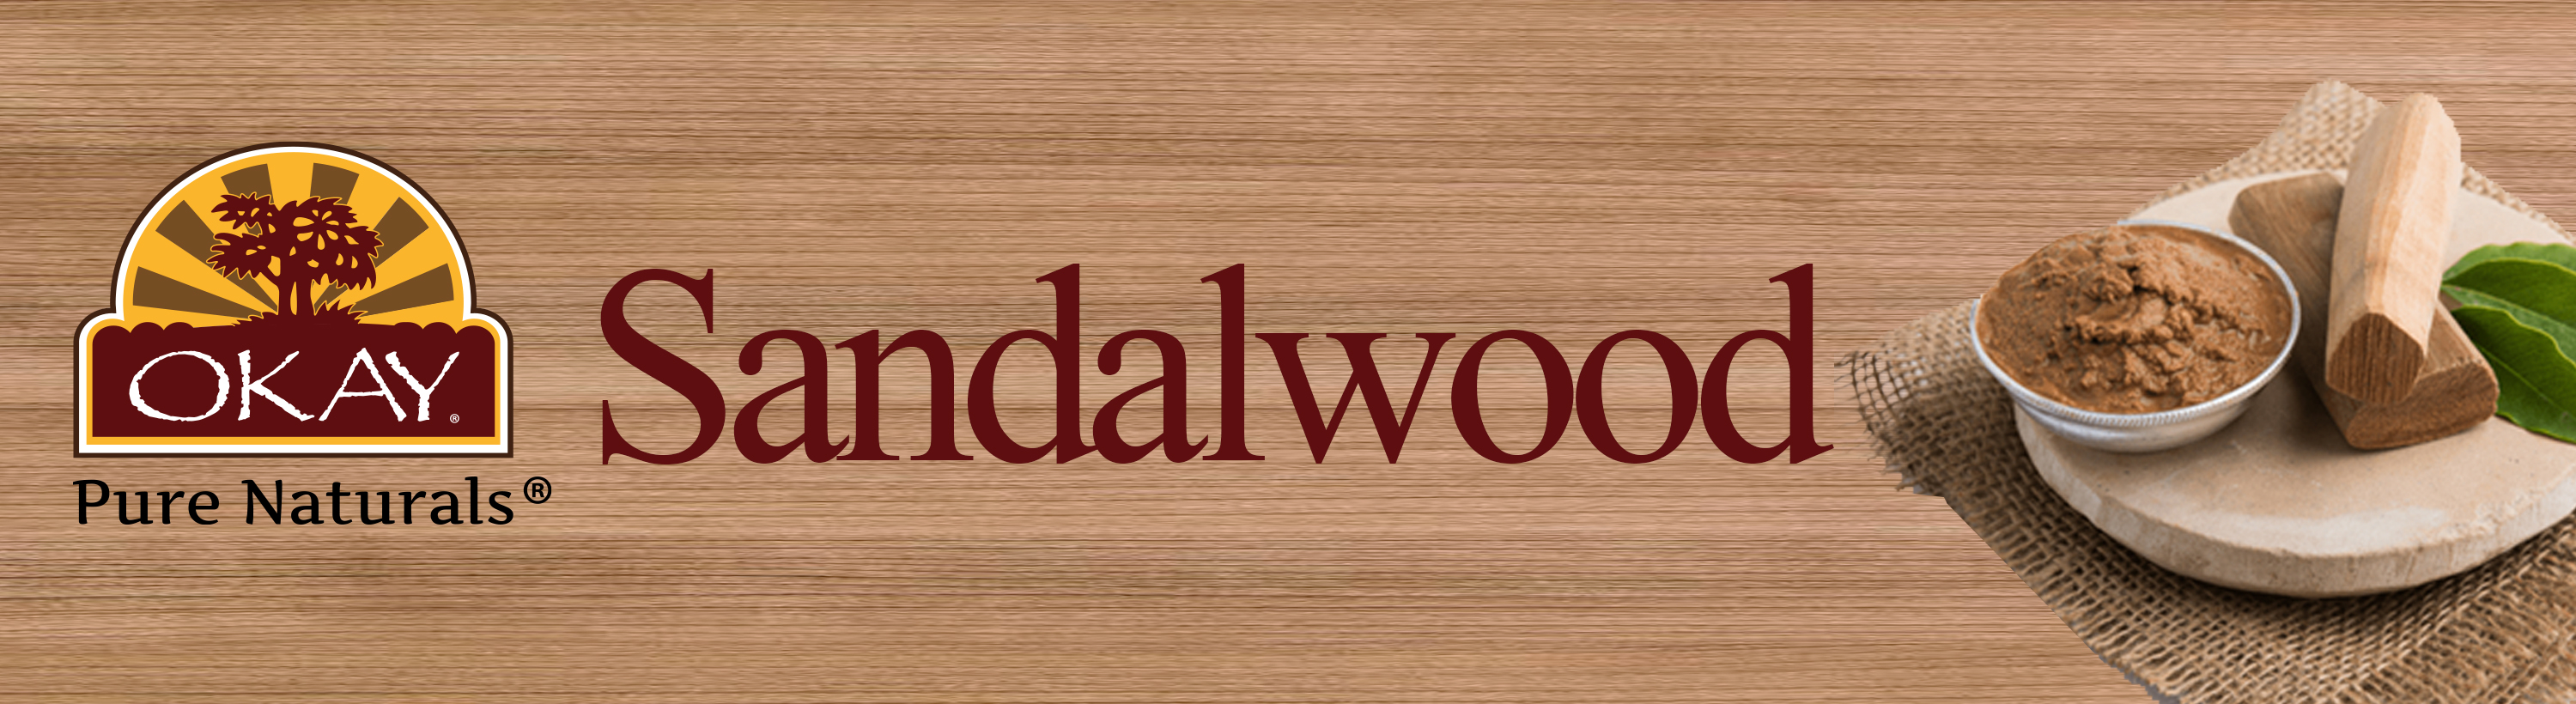 sandalwood.jpg